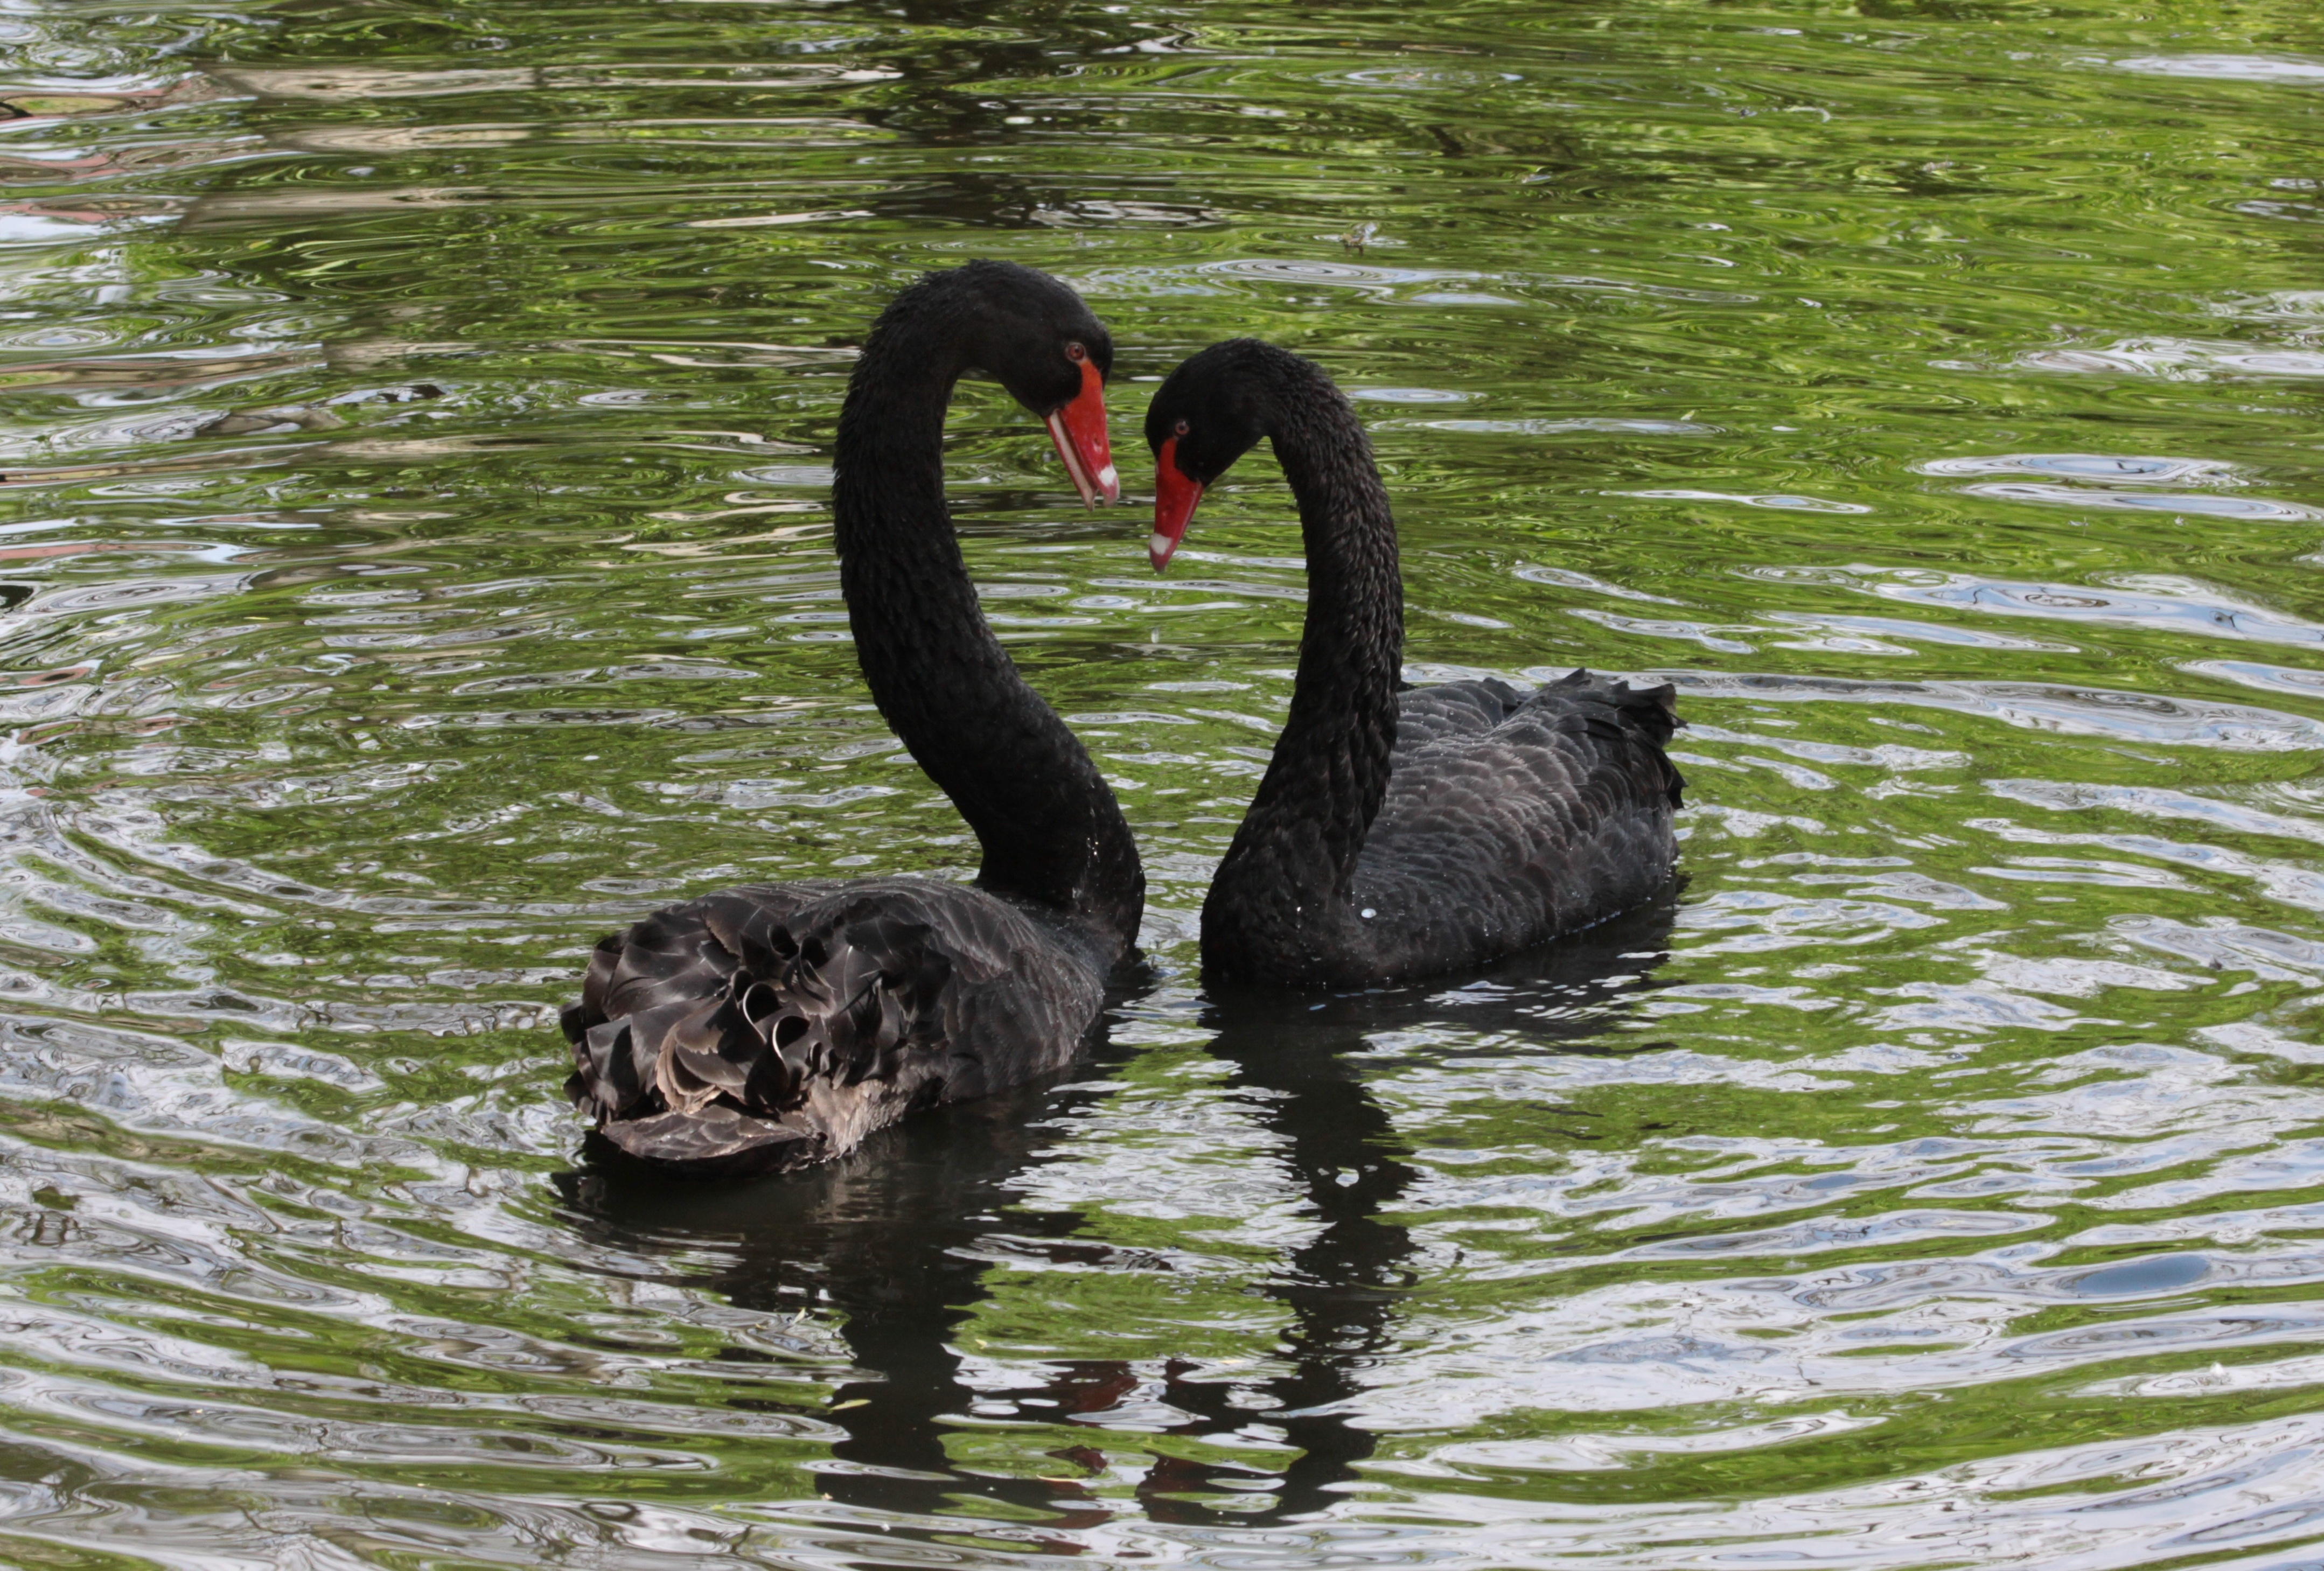 A pair of black swans swim across the lake.